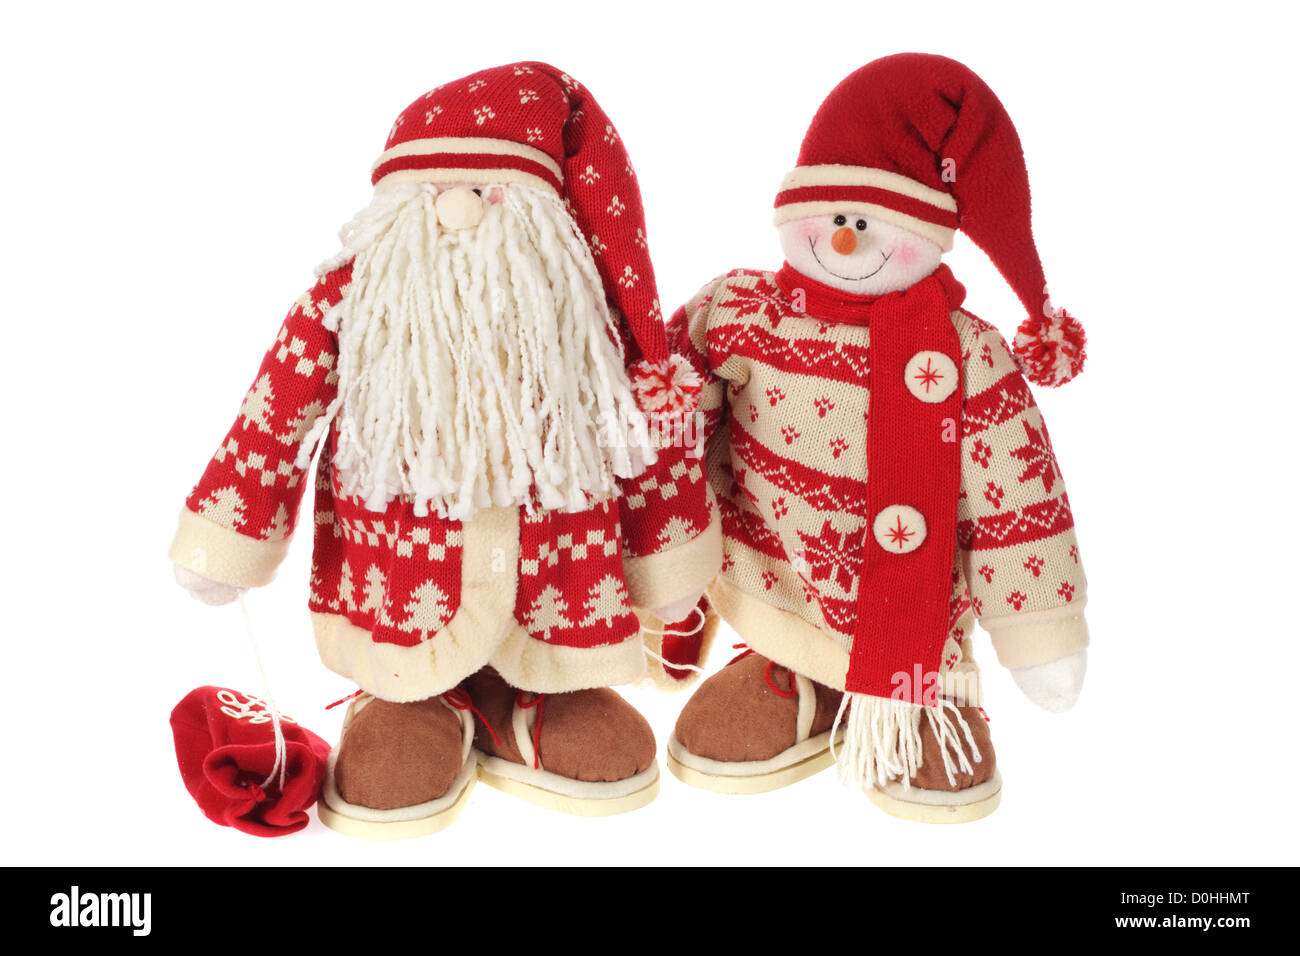 Santa Claus and Smiling snowman doll Stock Photo